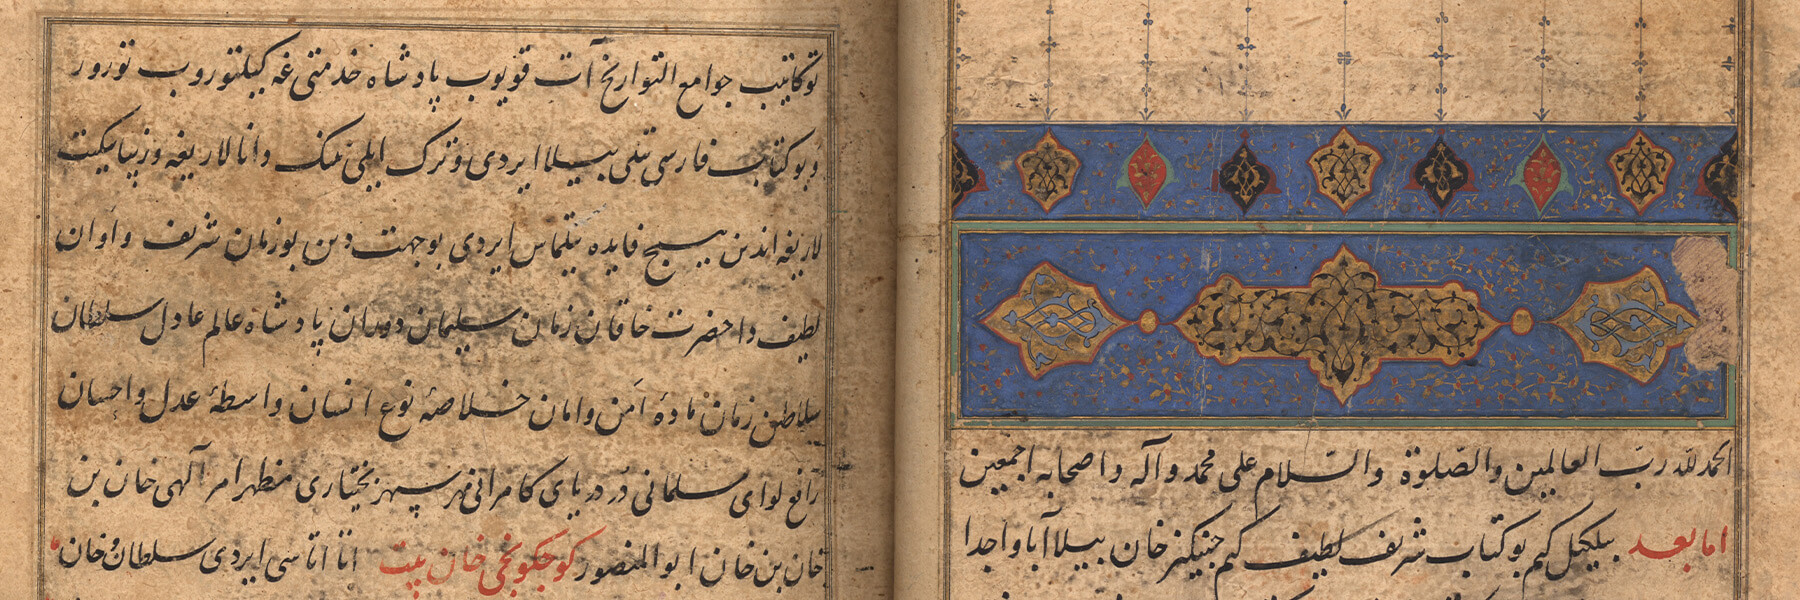 Rashid al-Din 16th-century Turkic manuscript